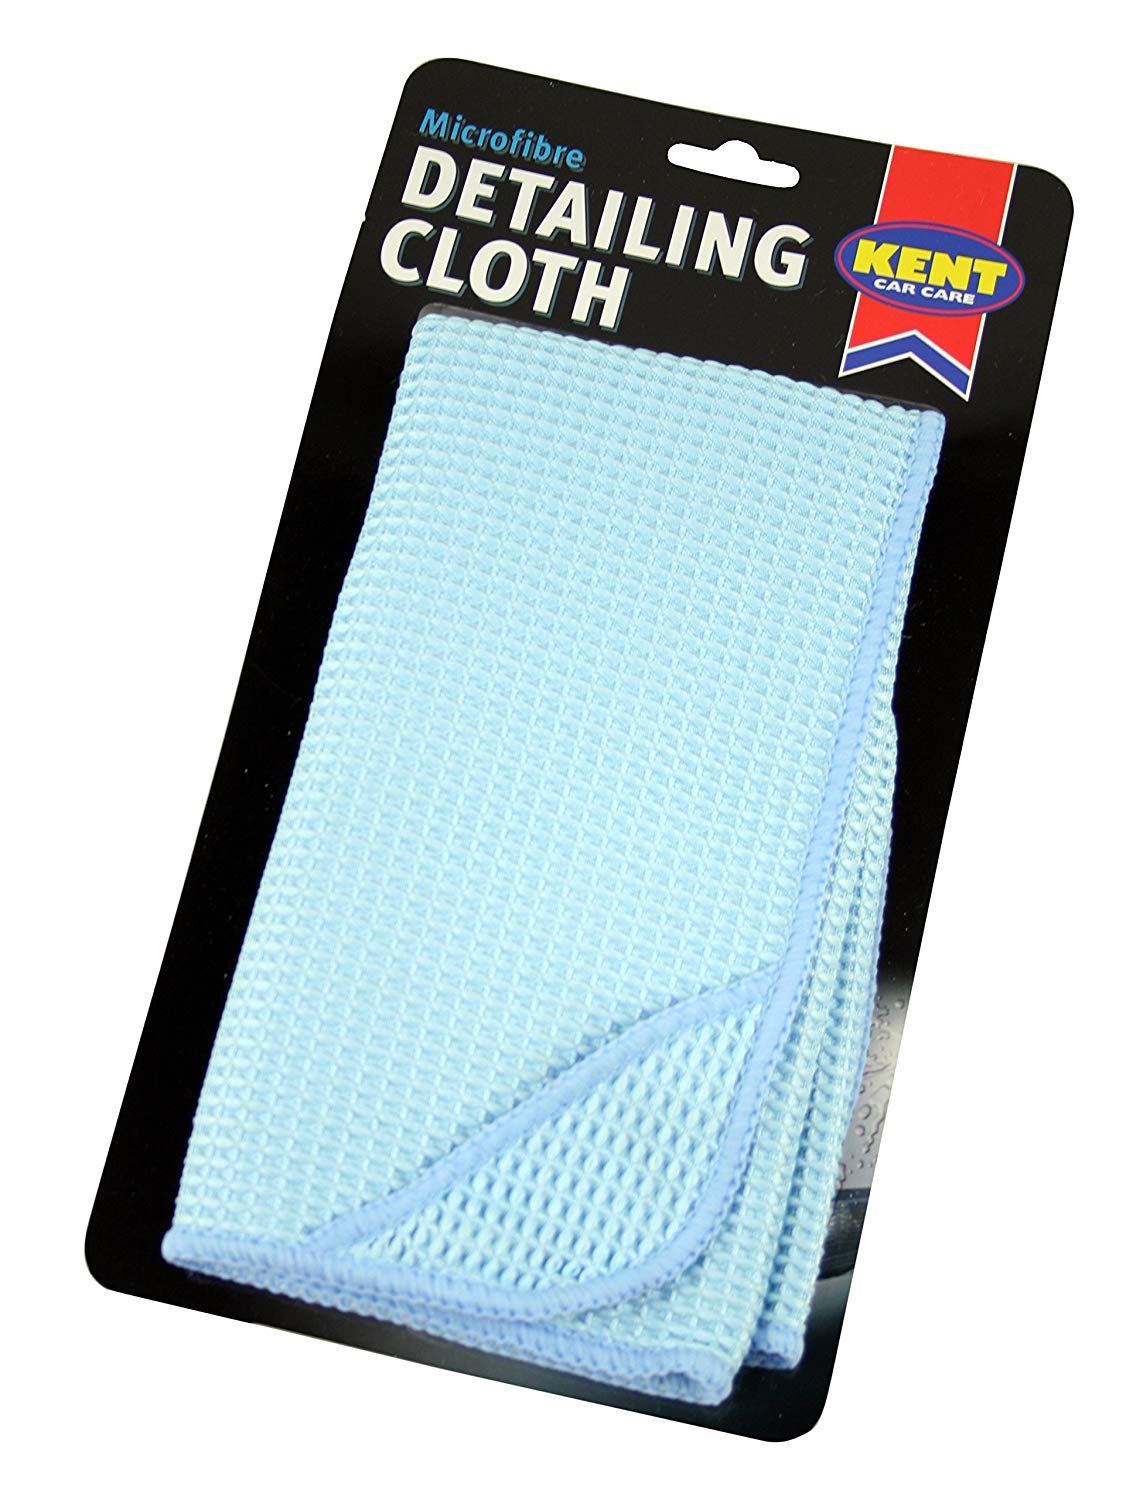 Kent Detailing Cloth